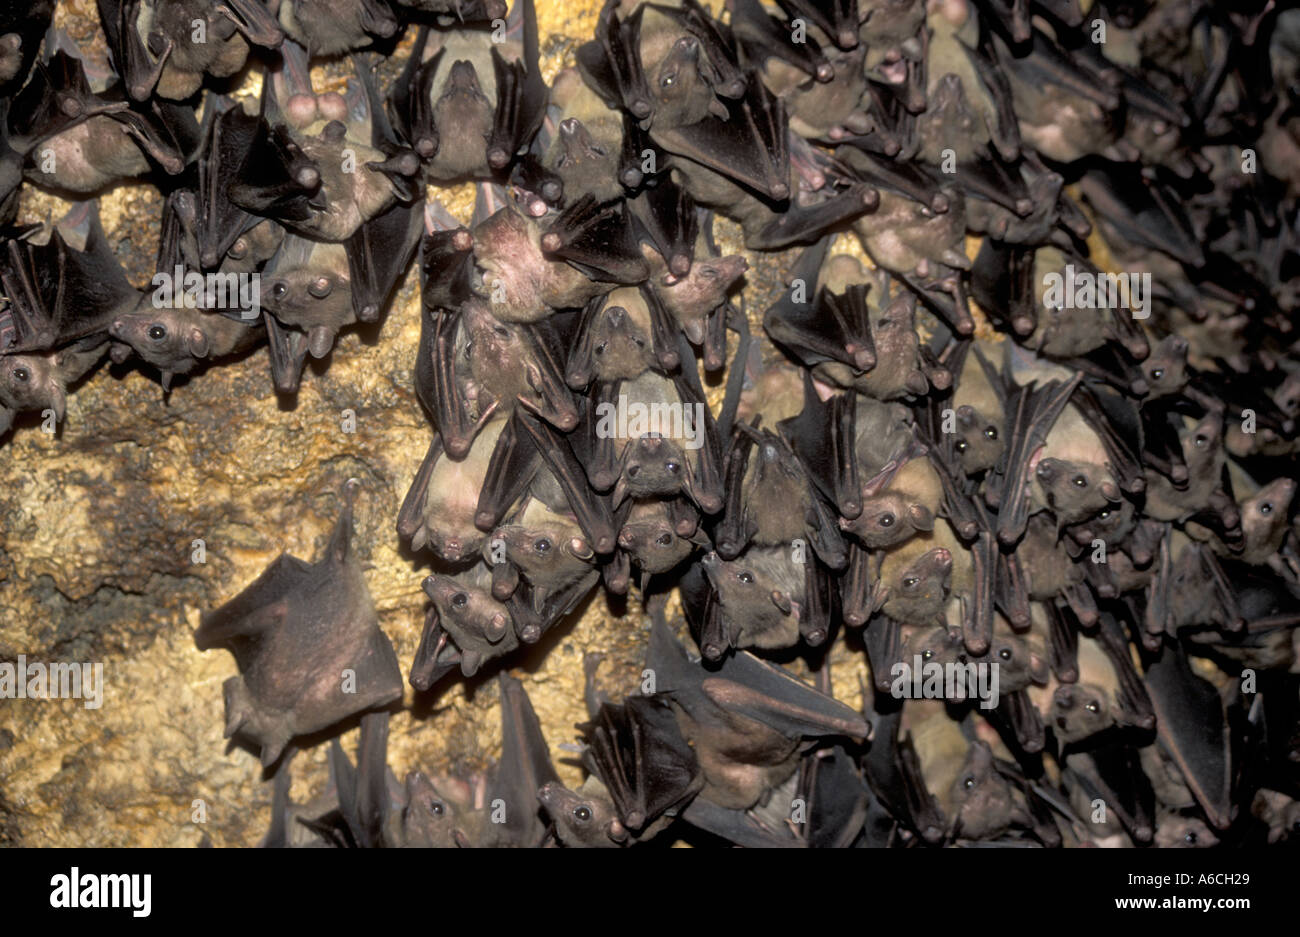 Fruit Bats roosting in a cave in Queen Elizabeth National Park Uganda East Africa Stock Photo